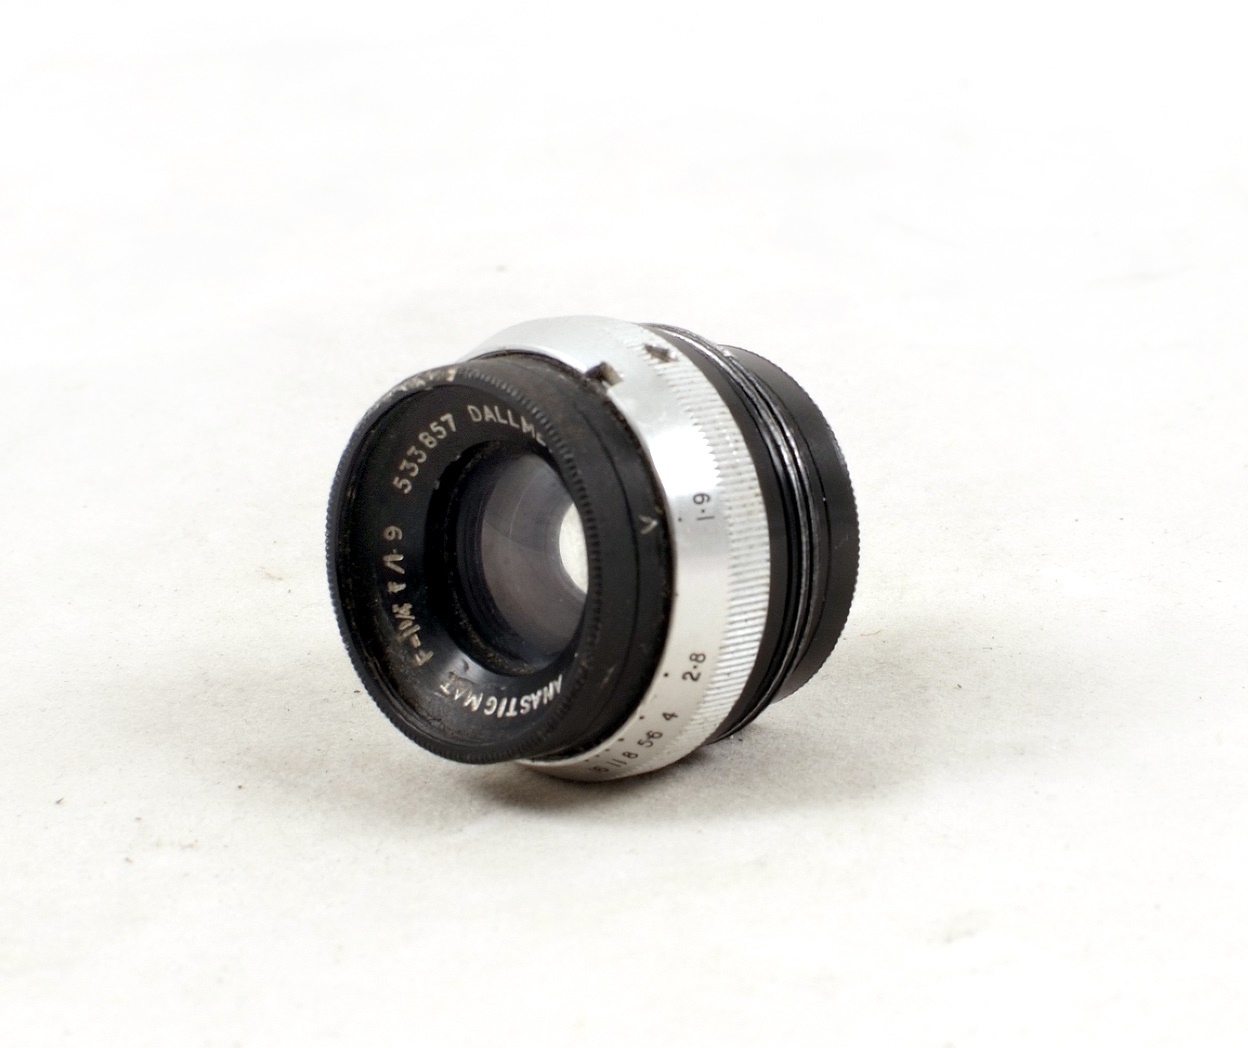 Dallmeyer f1.9 1 1/4inch Super Six Lens